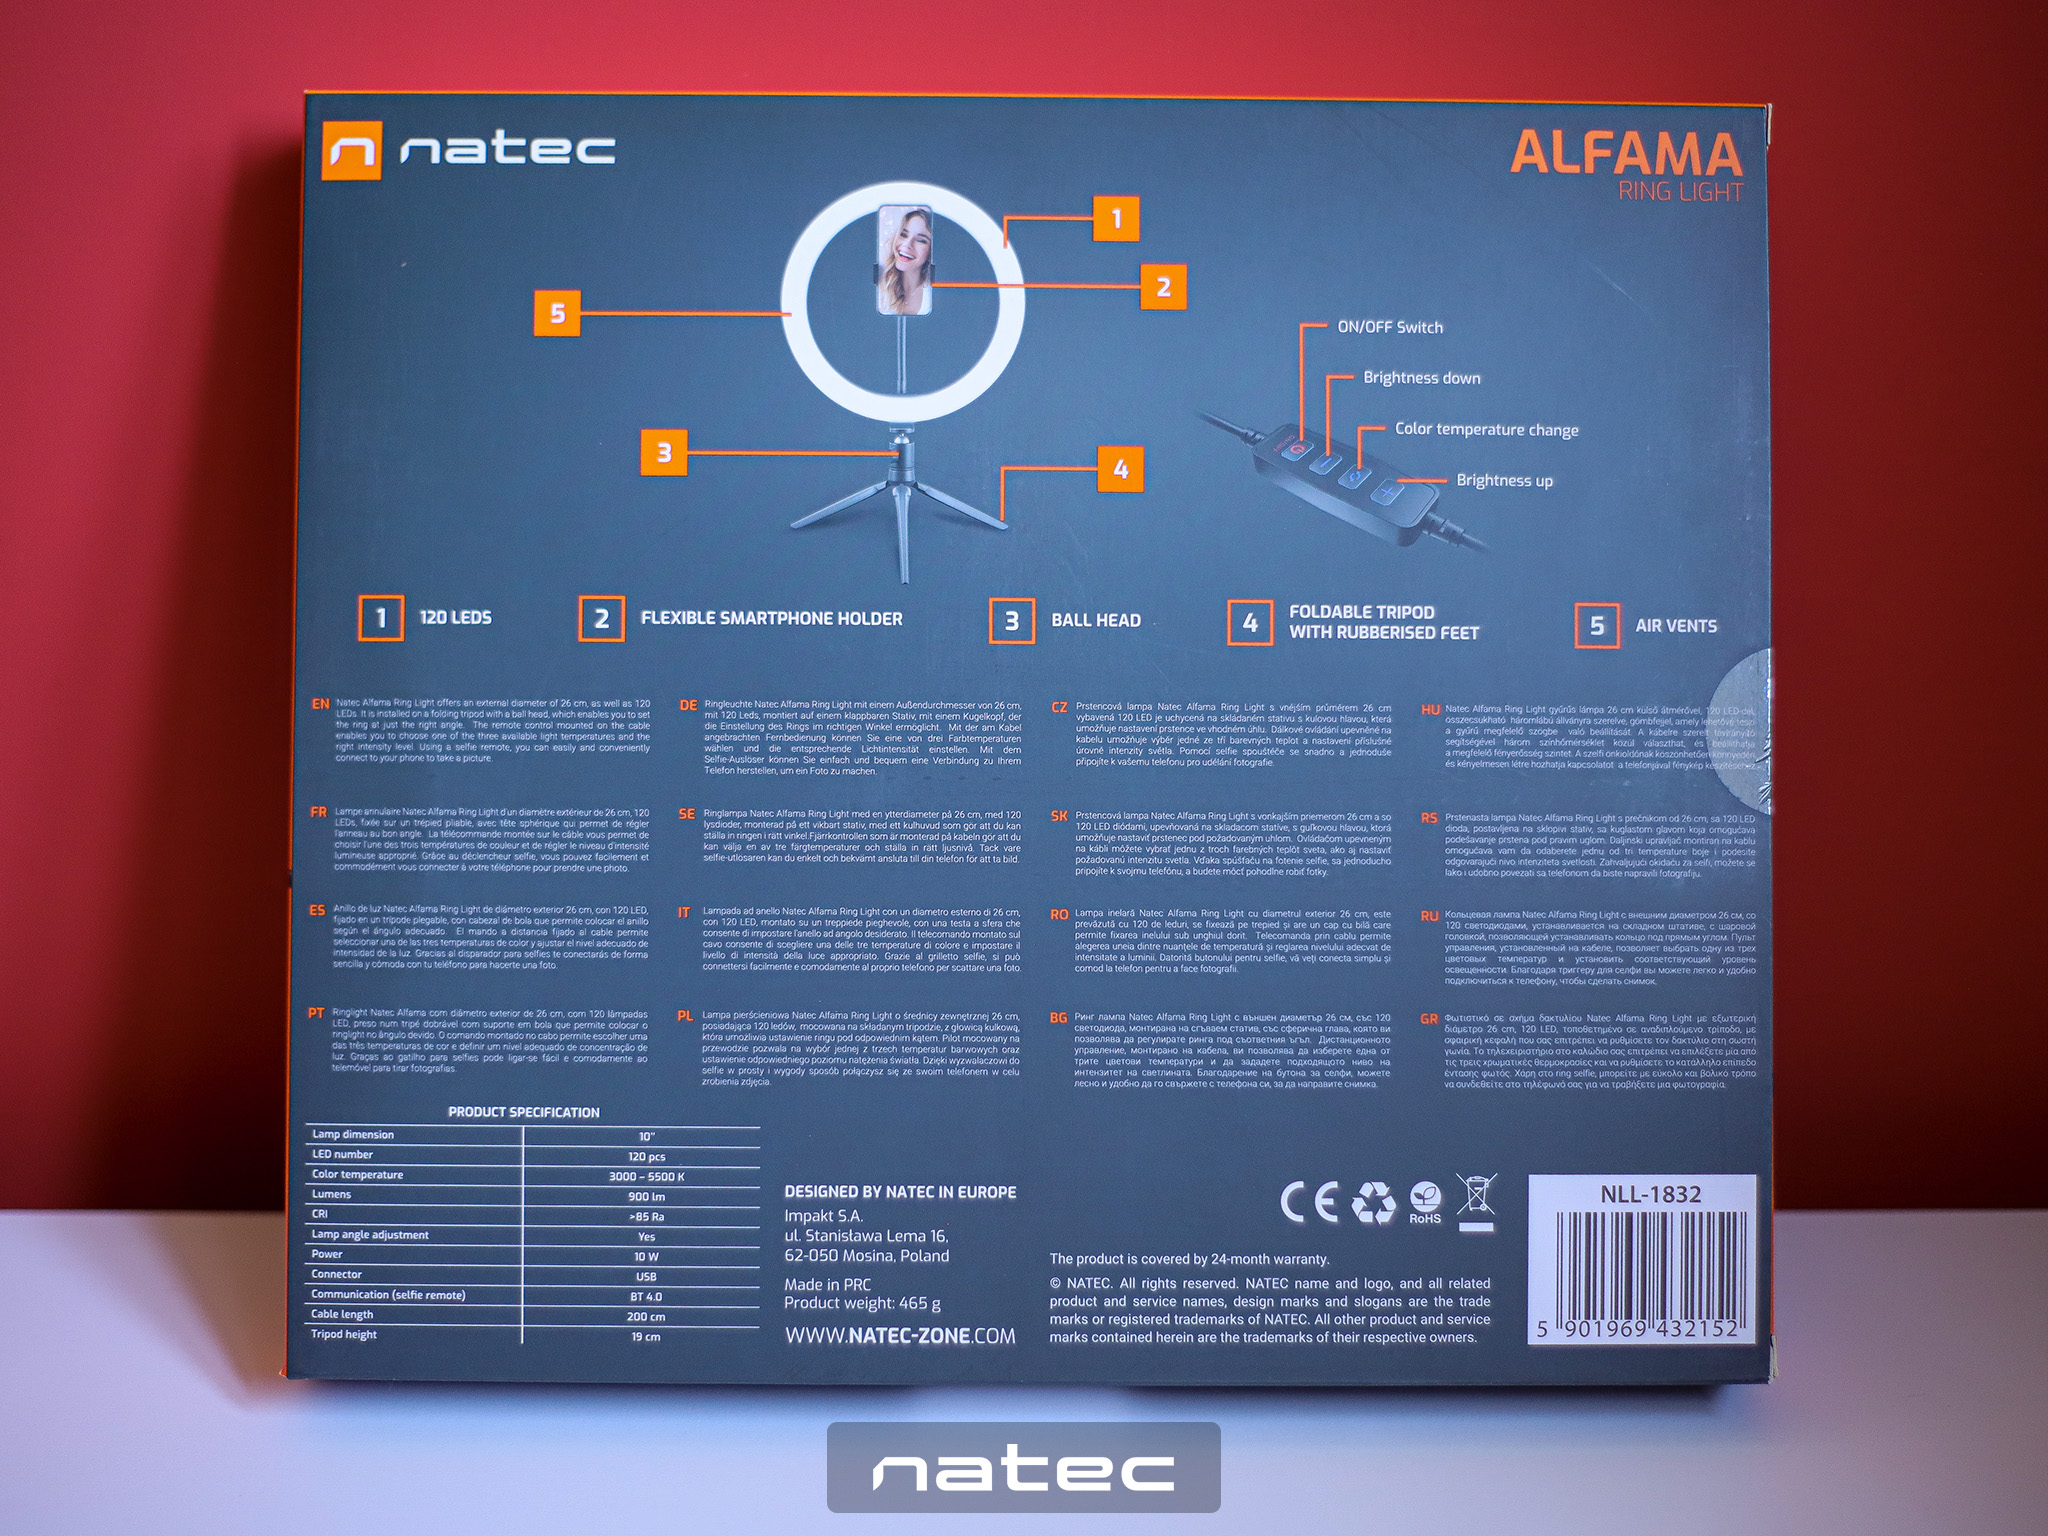 NATEC Alfama Ring Light tył pudełka